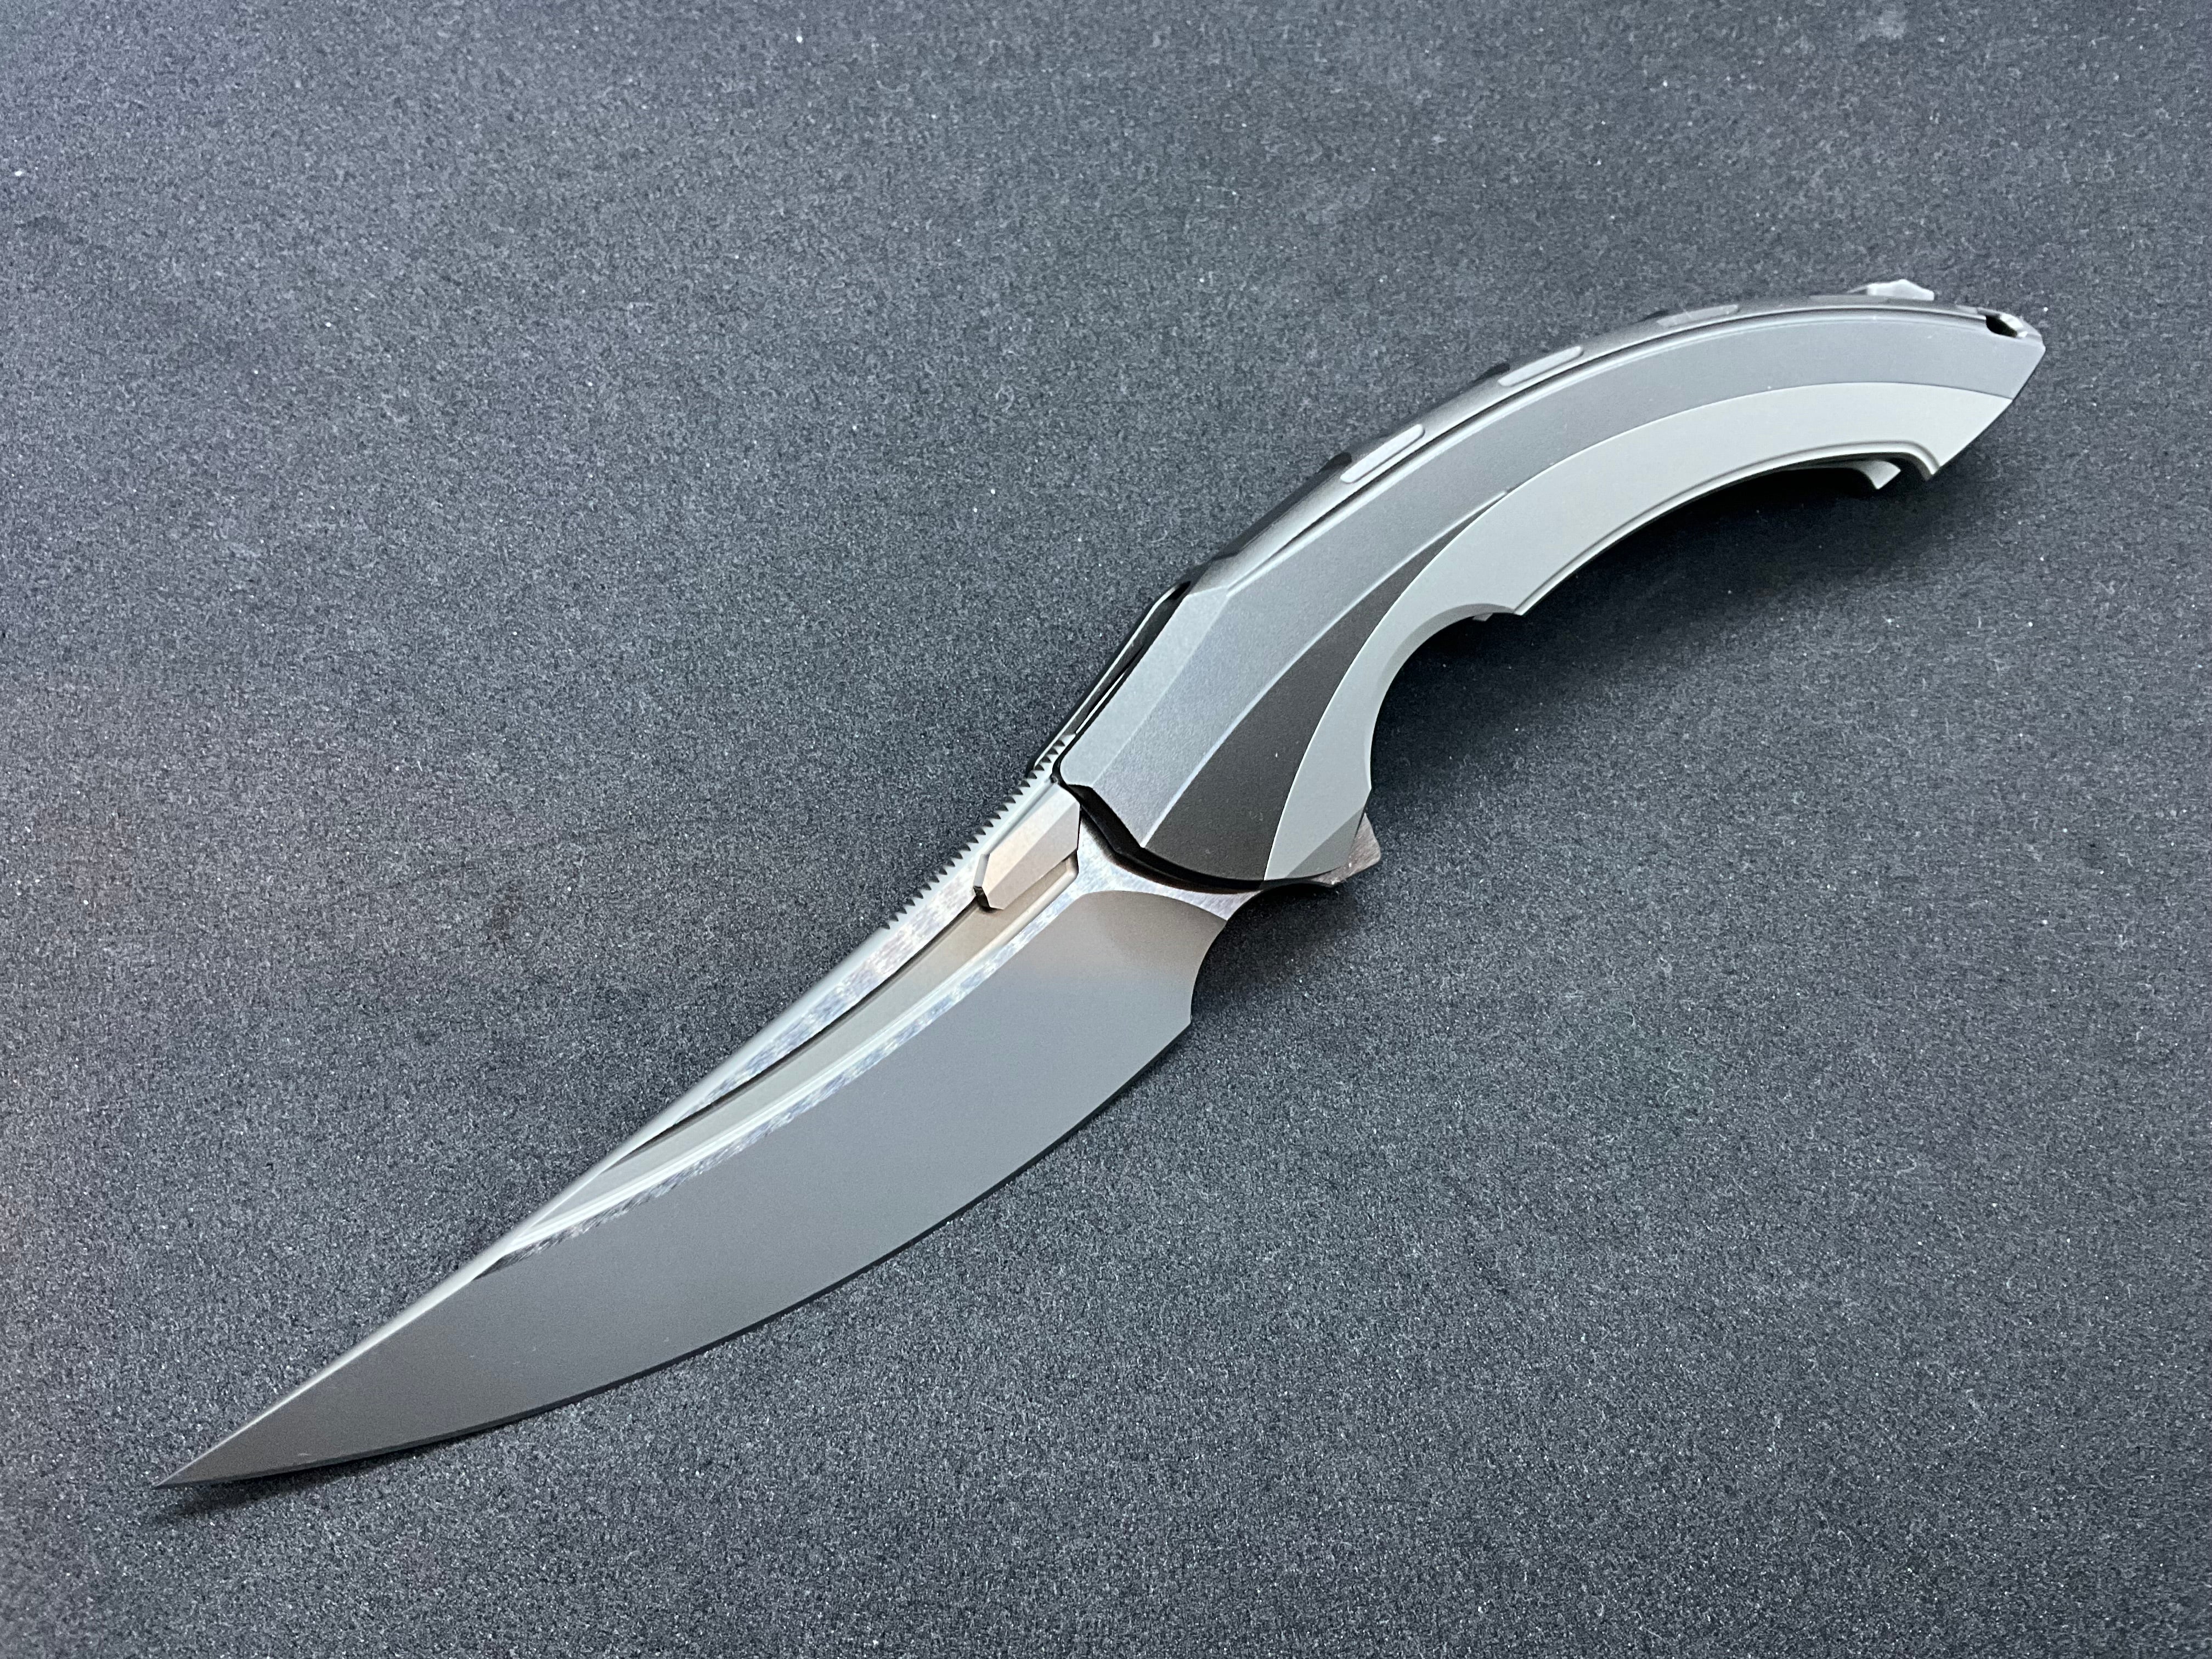 Rike Knife - Lamella (updated version)